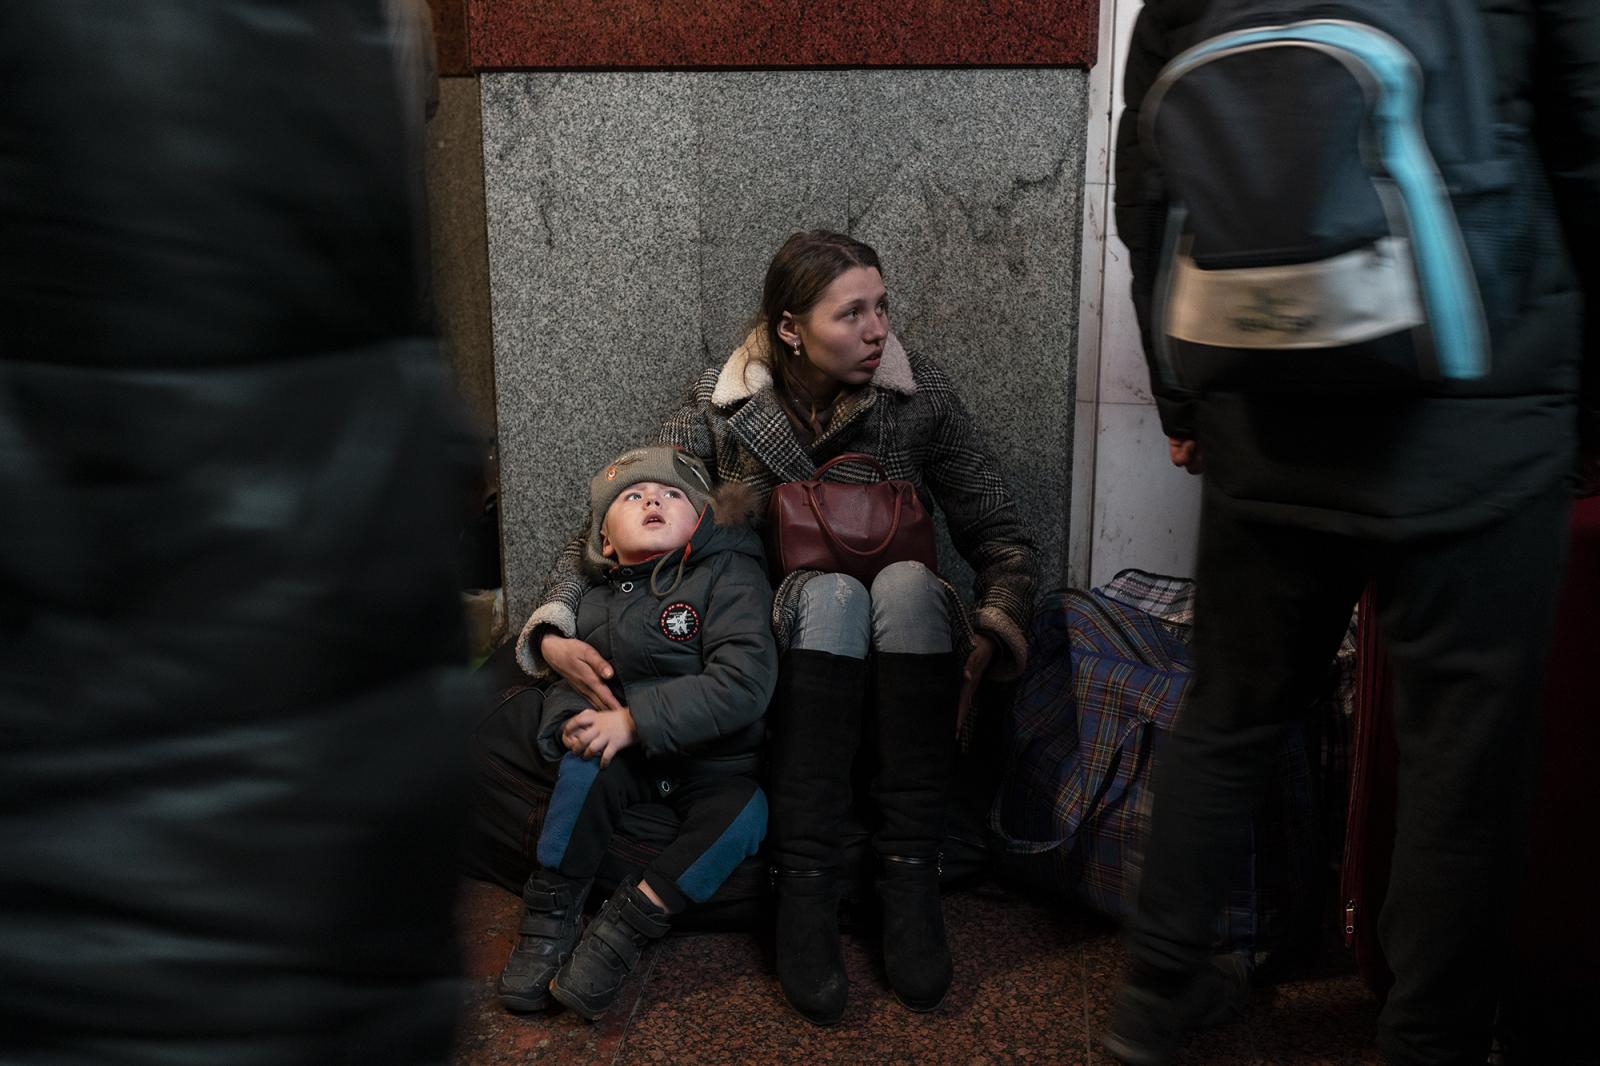 Ukraine Refugee Crisis